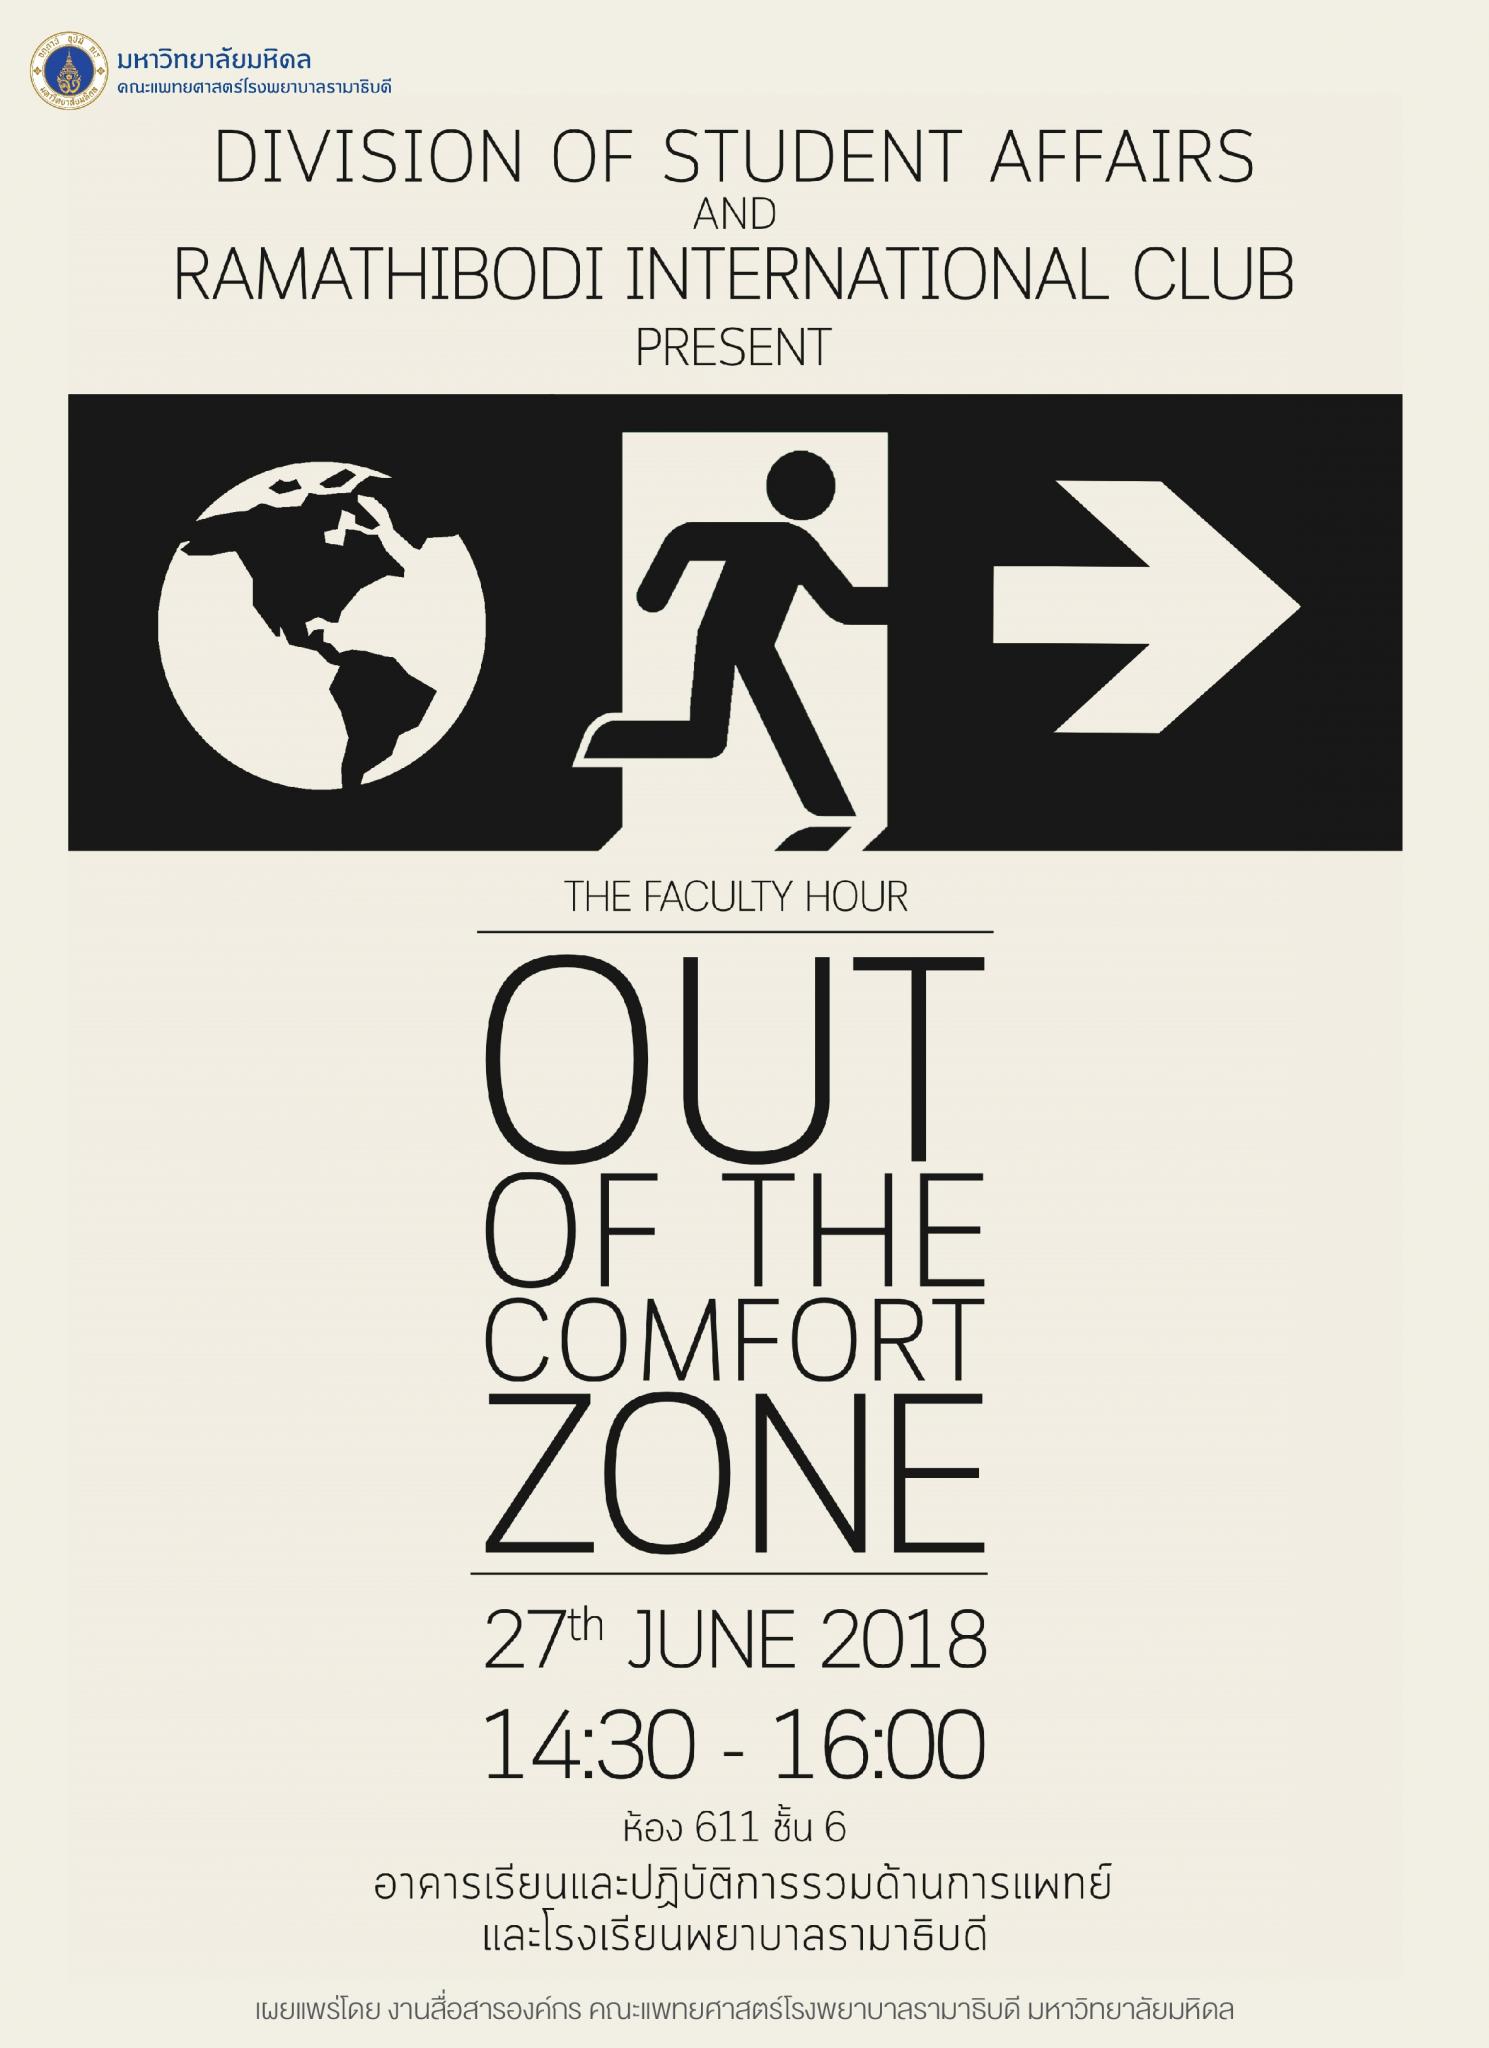 Ramathibodi International Club: Out of the comfort zone